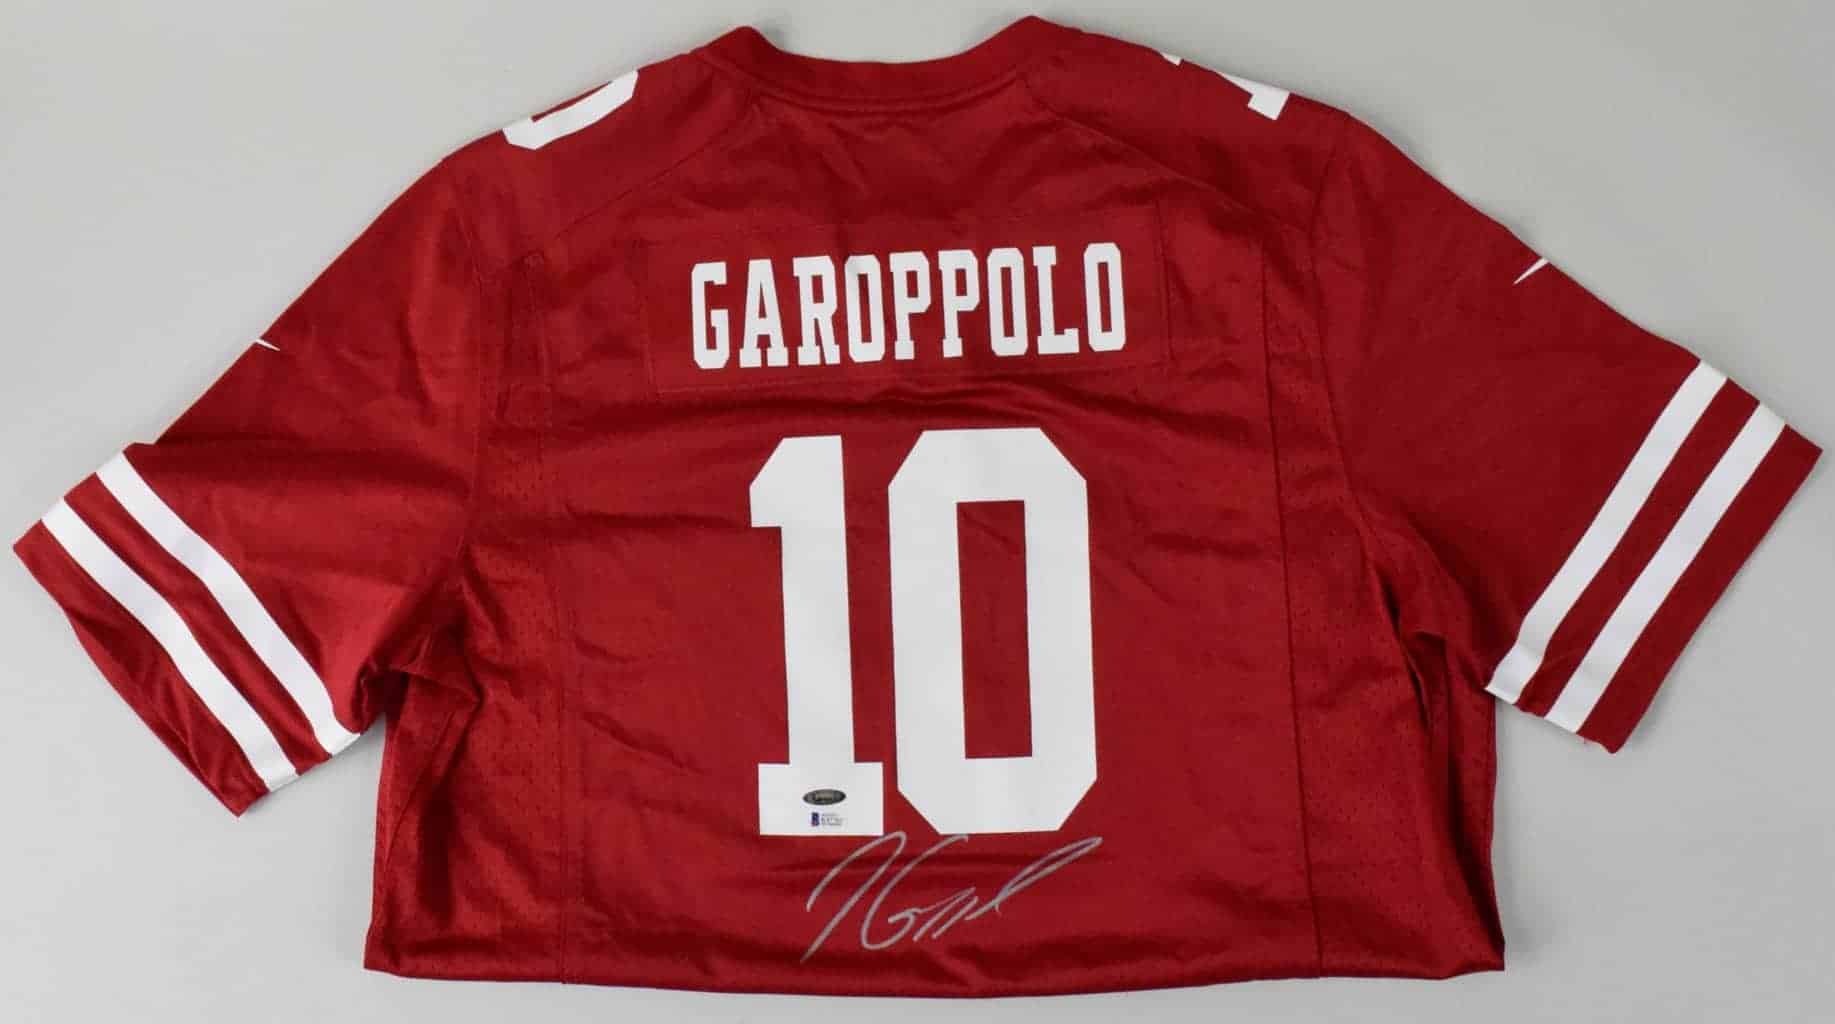 jimmy garoppolo signed jersey